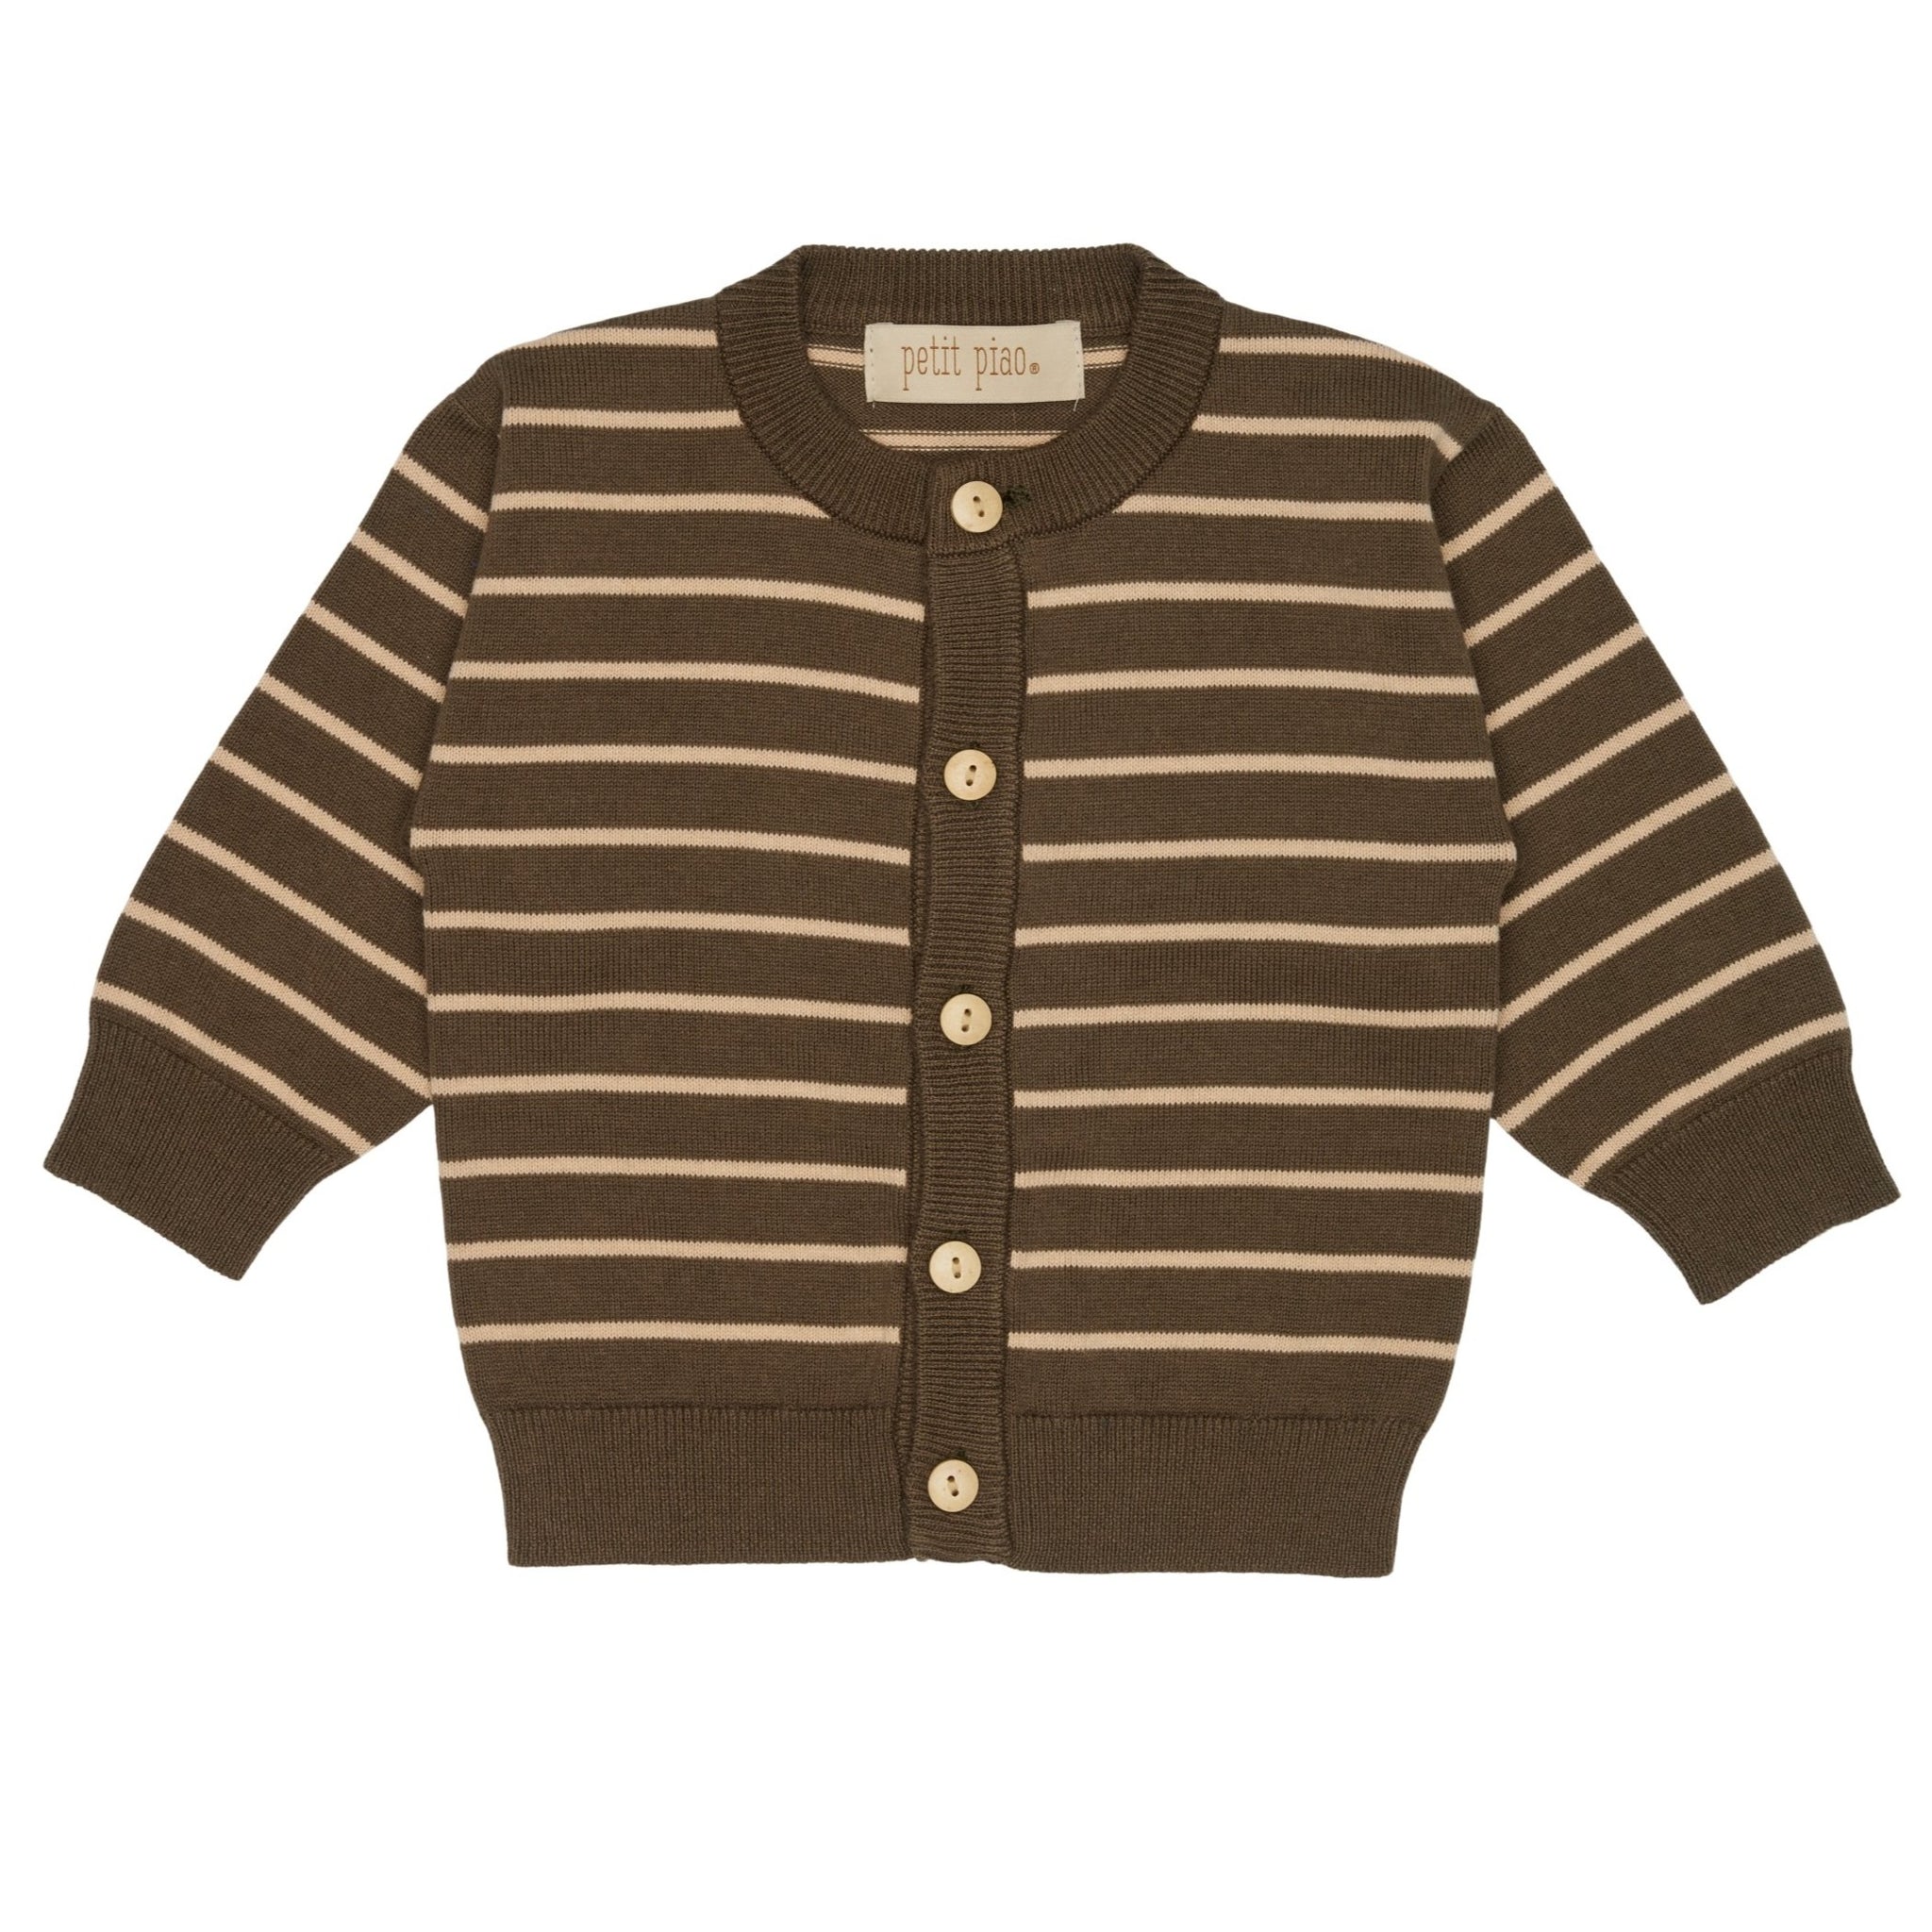 Petit Piao - Cardigan Knit Striped - Green / Cream